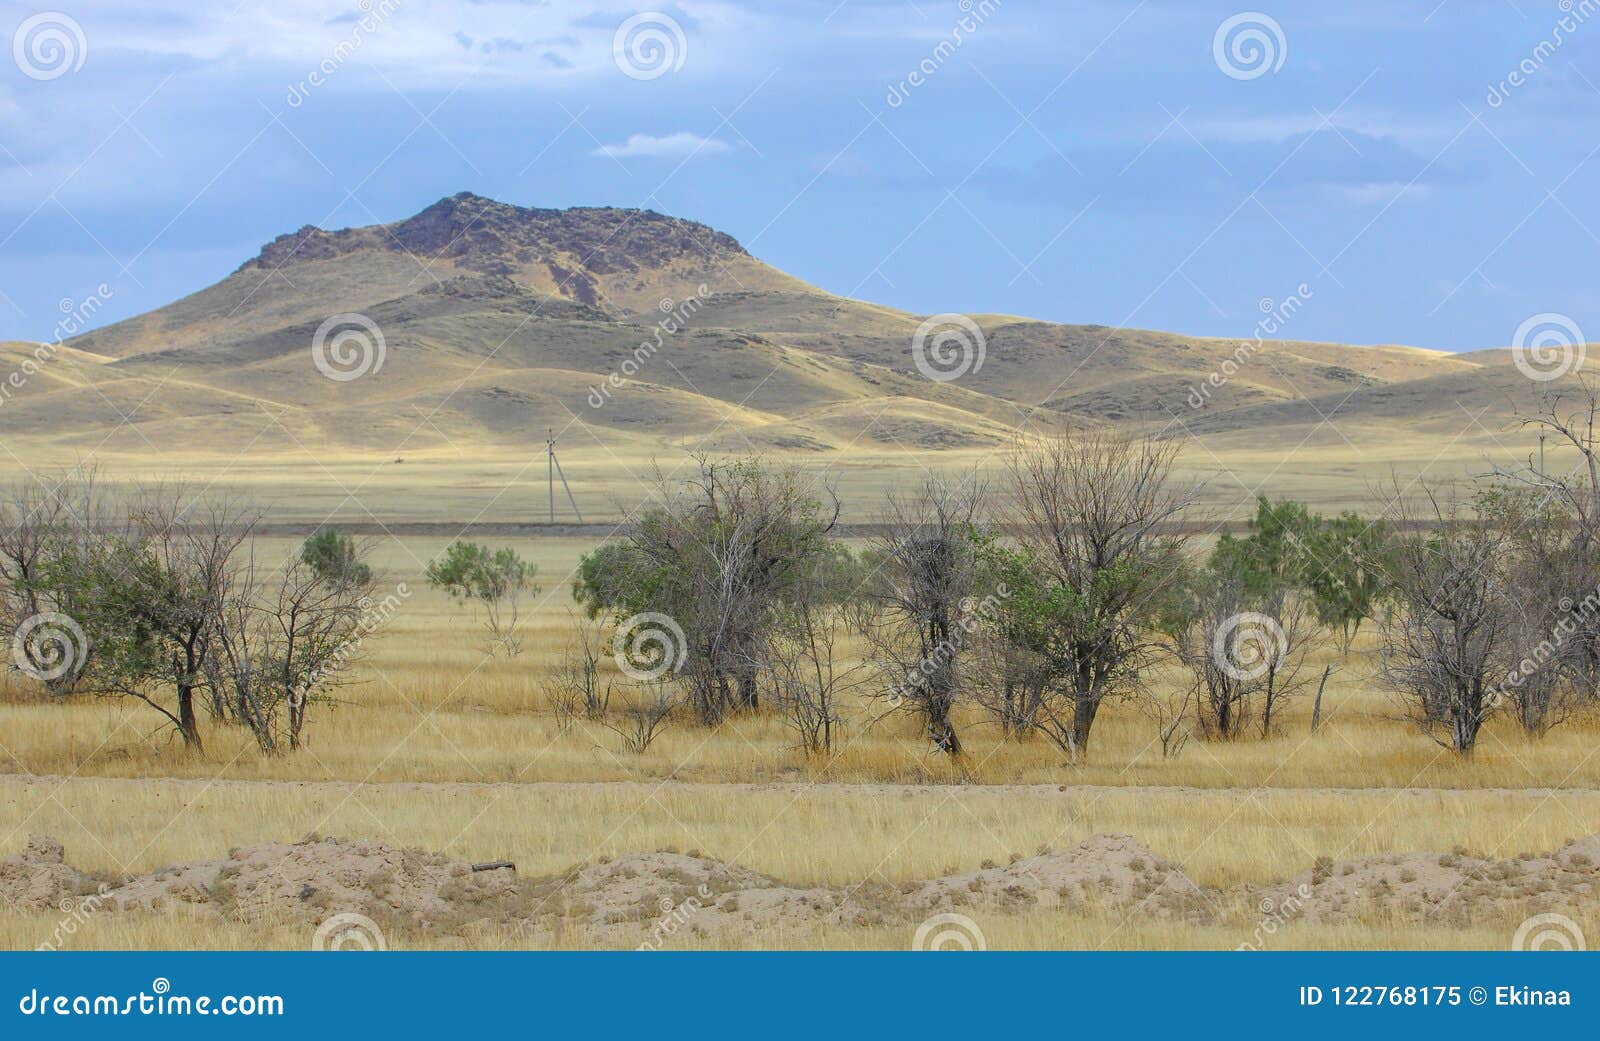 autumn landscape, steppe with mountains. prairie, veld, veldt. a